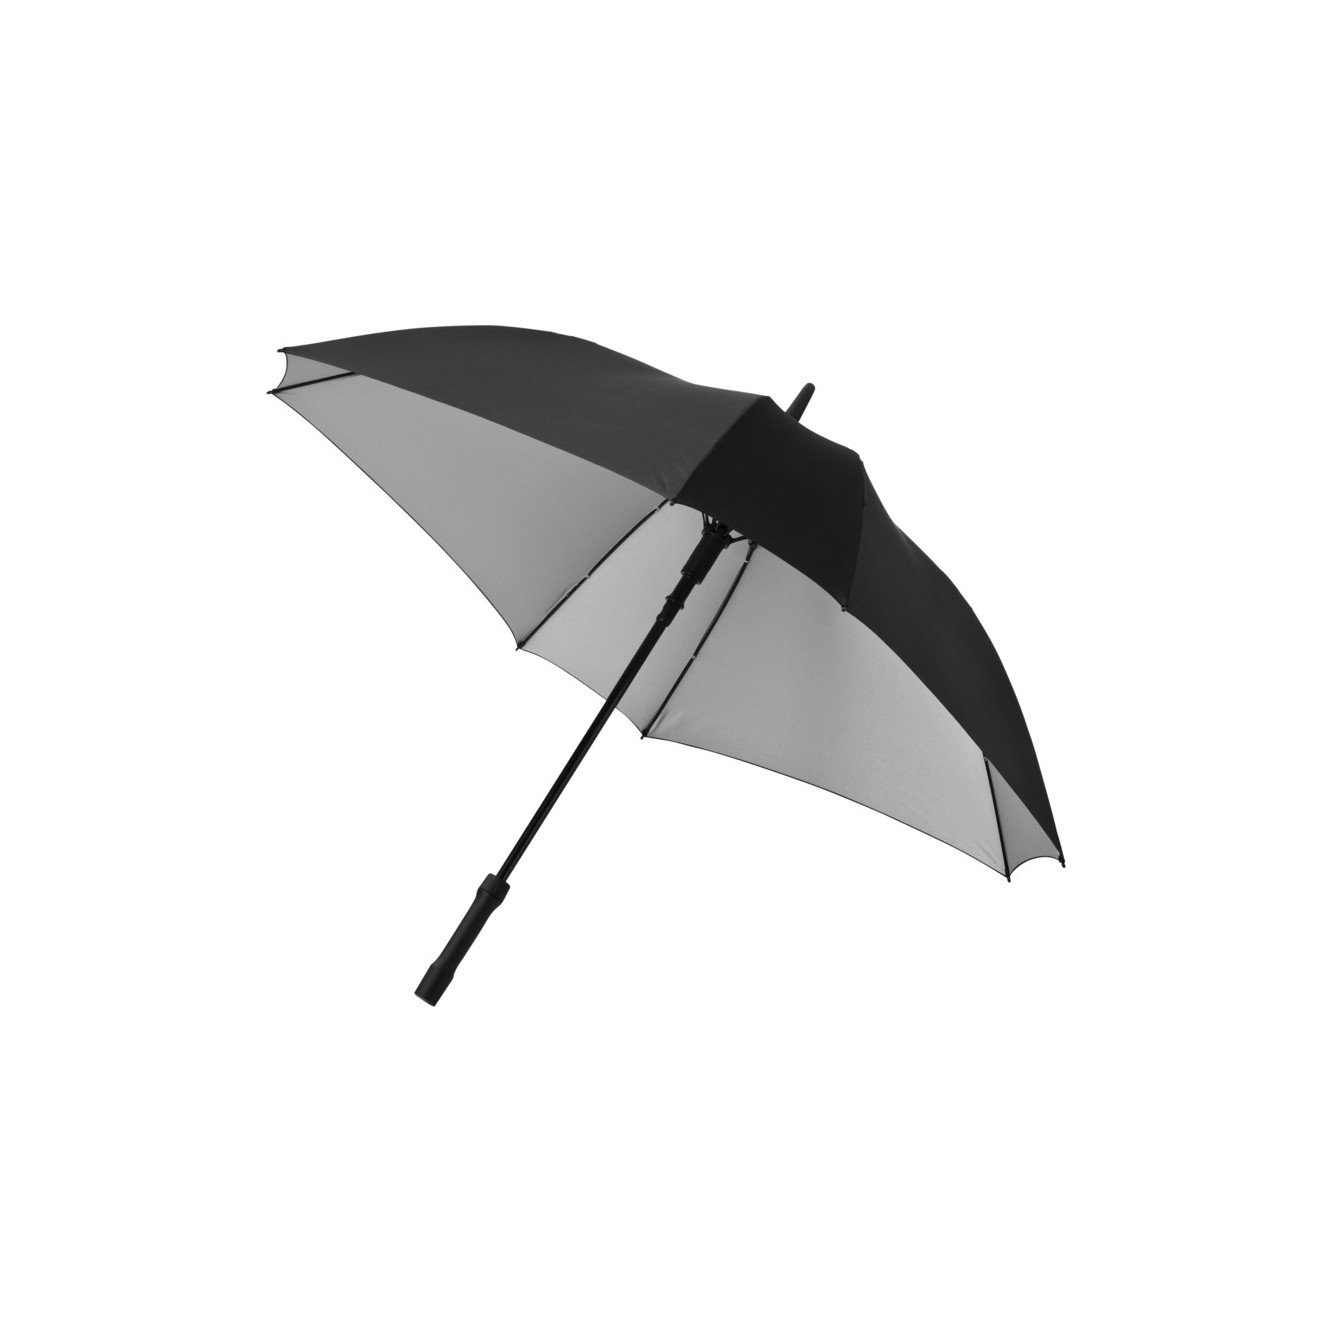 23'' Square automatische paraplu